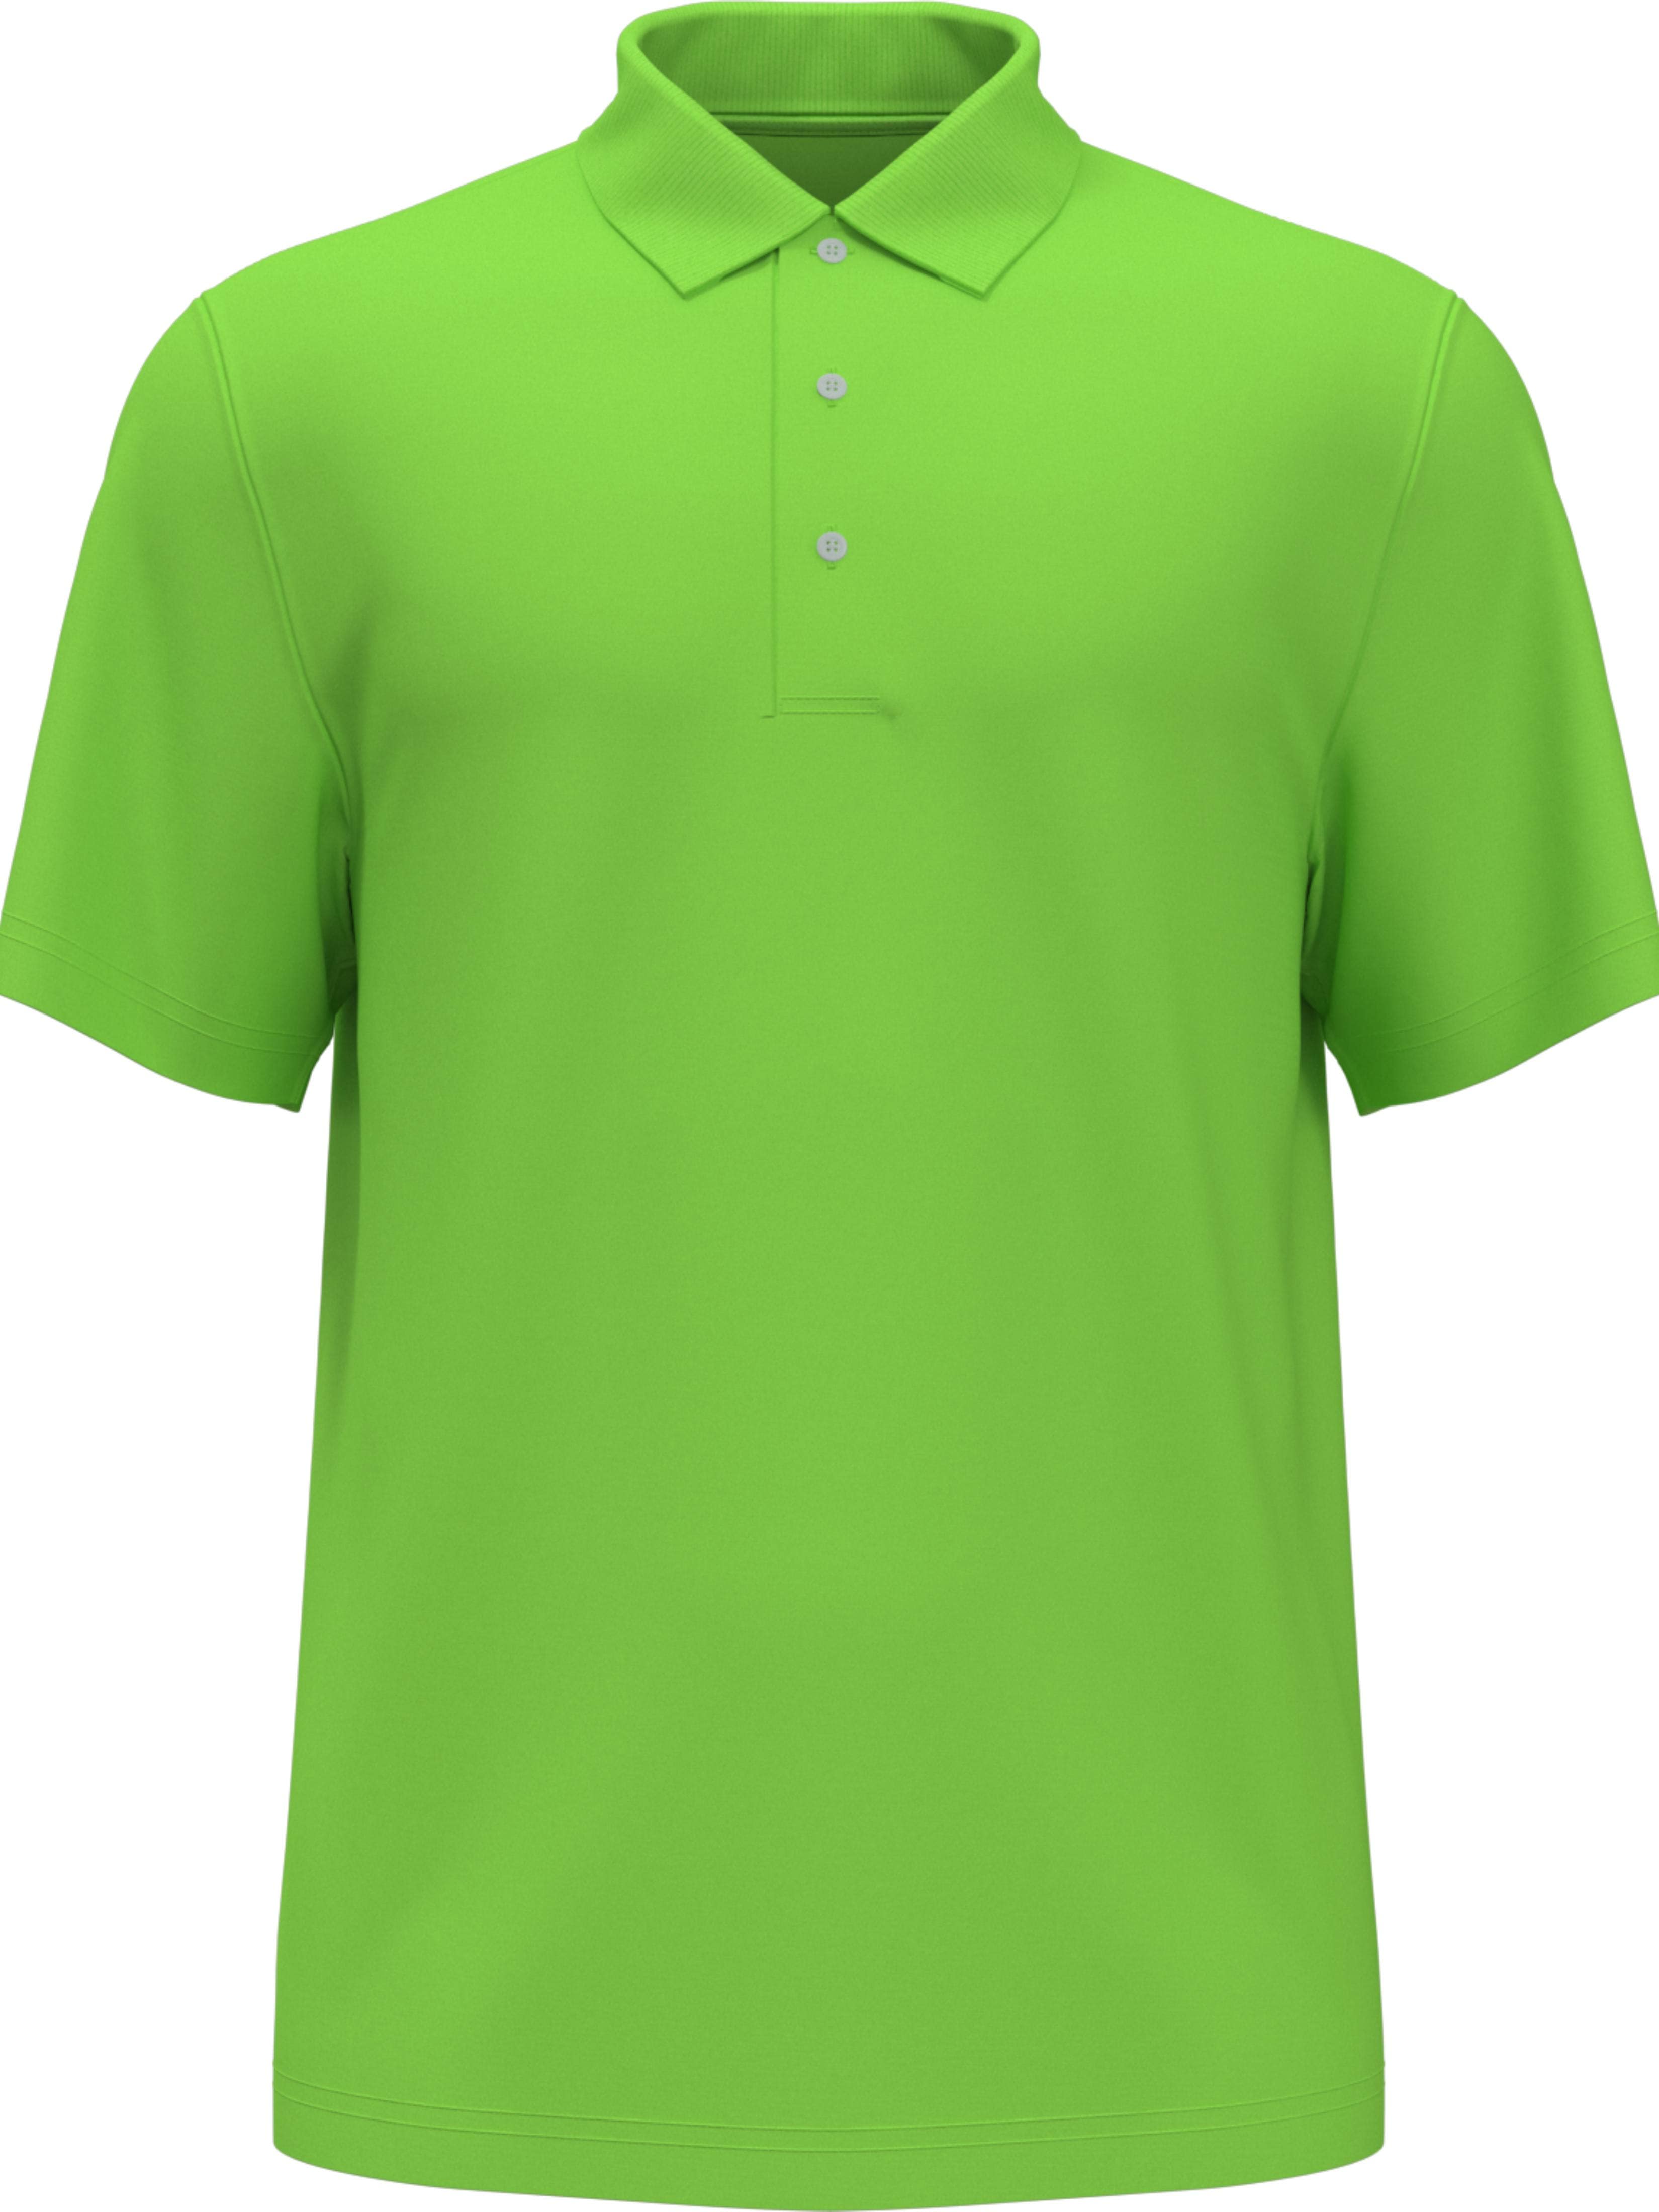 PGA TOUR Apparel Boys Short Sleeve AirFlux™ Polo Shirt, Size XL, Jasmine Green, 100% Polyester | Golf Apparel Shop